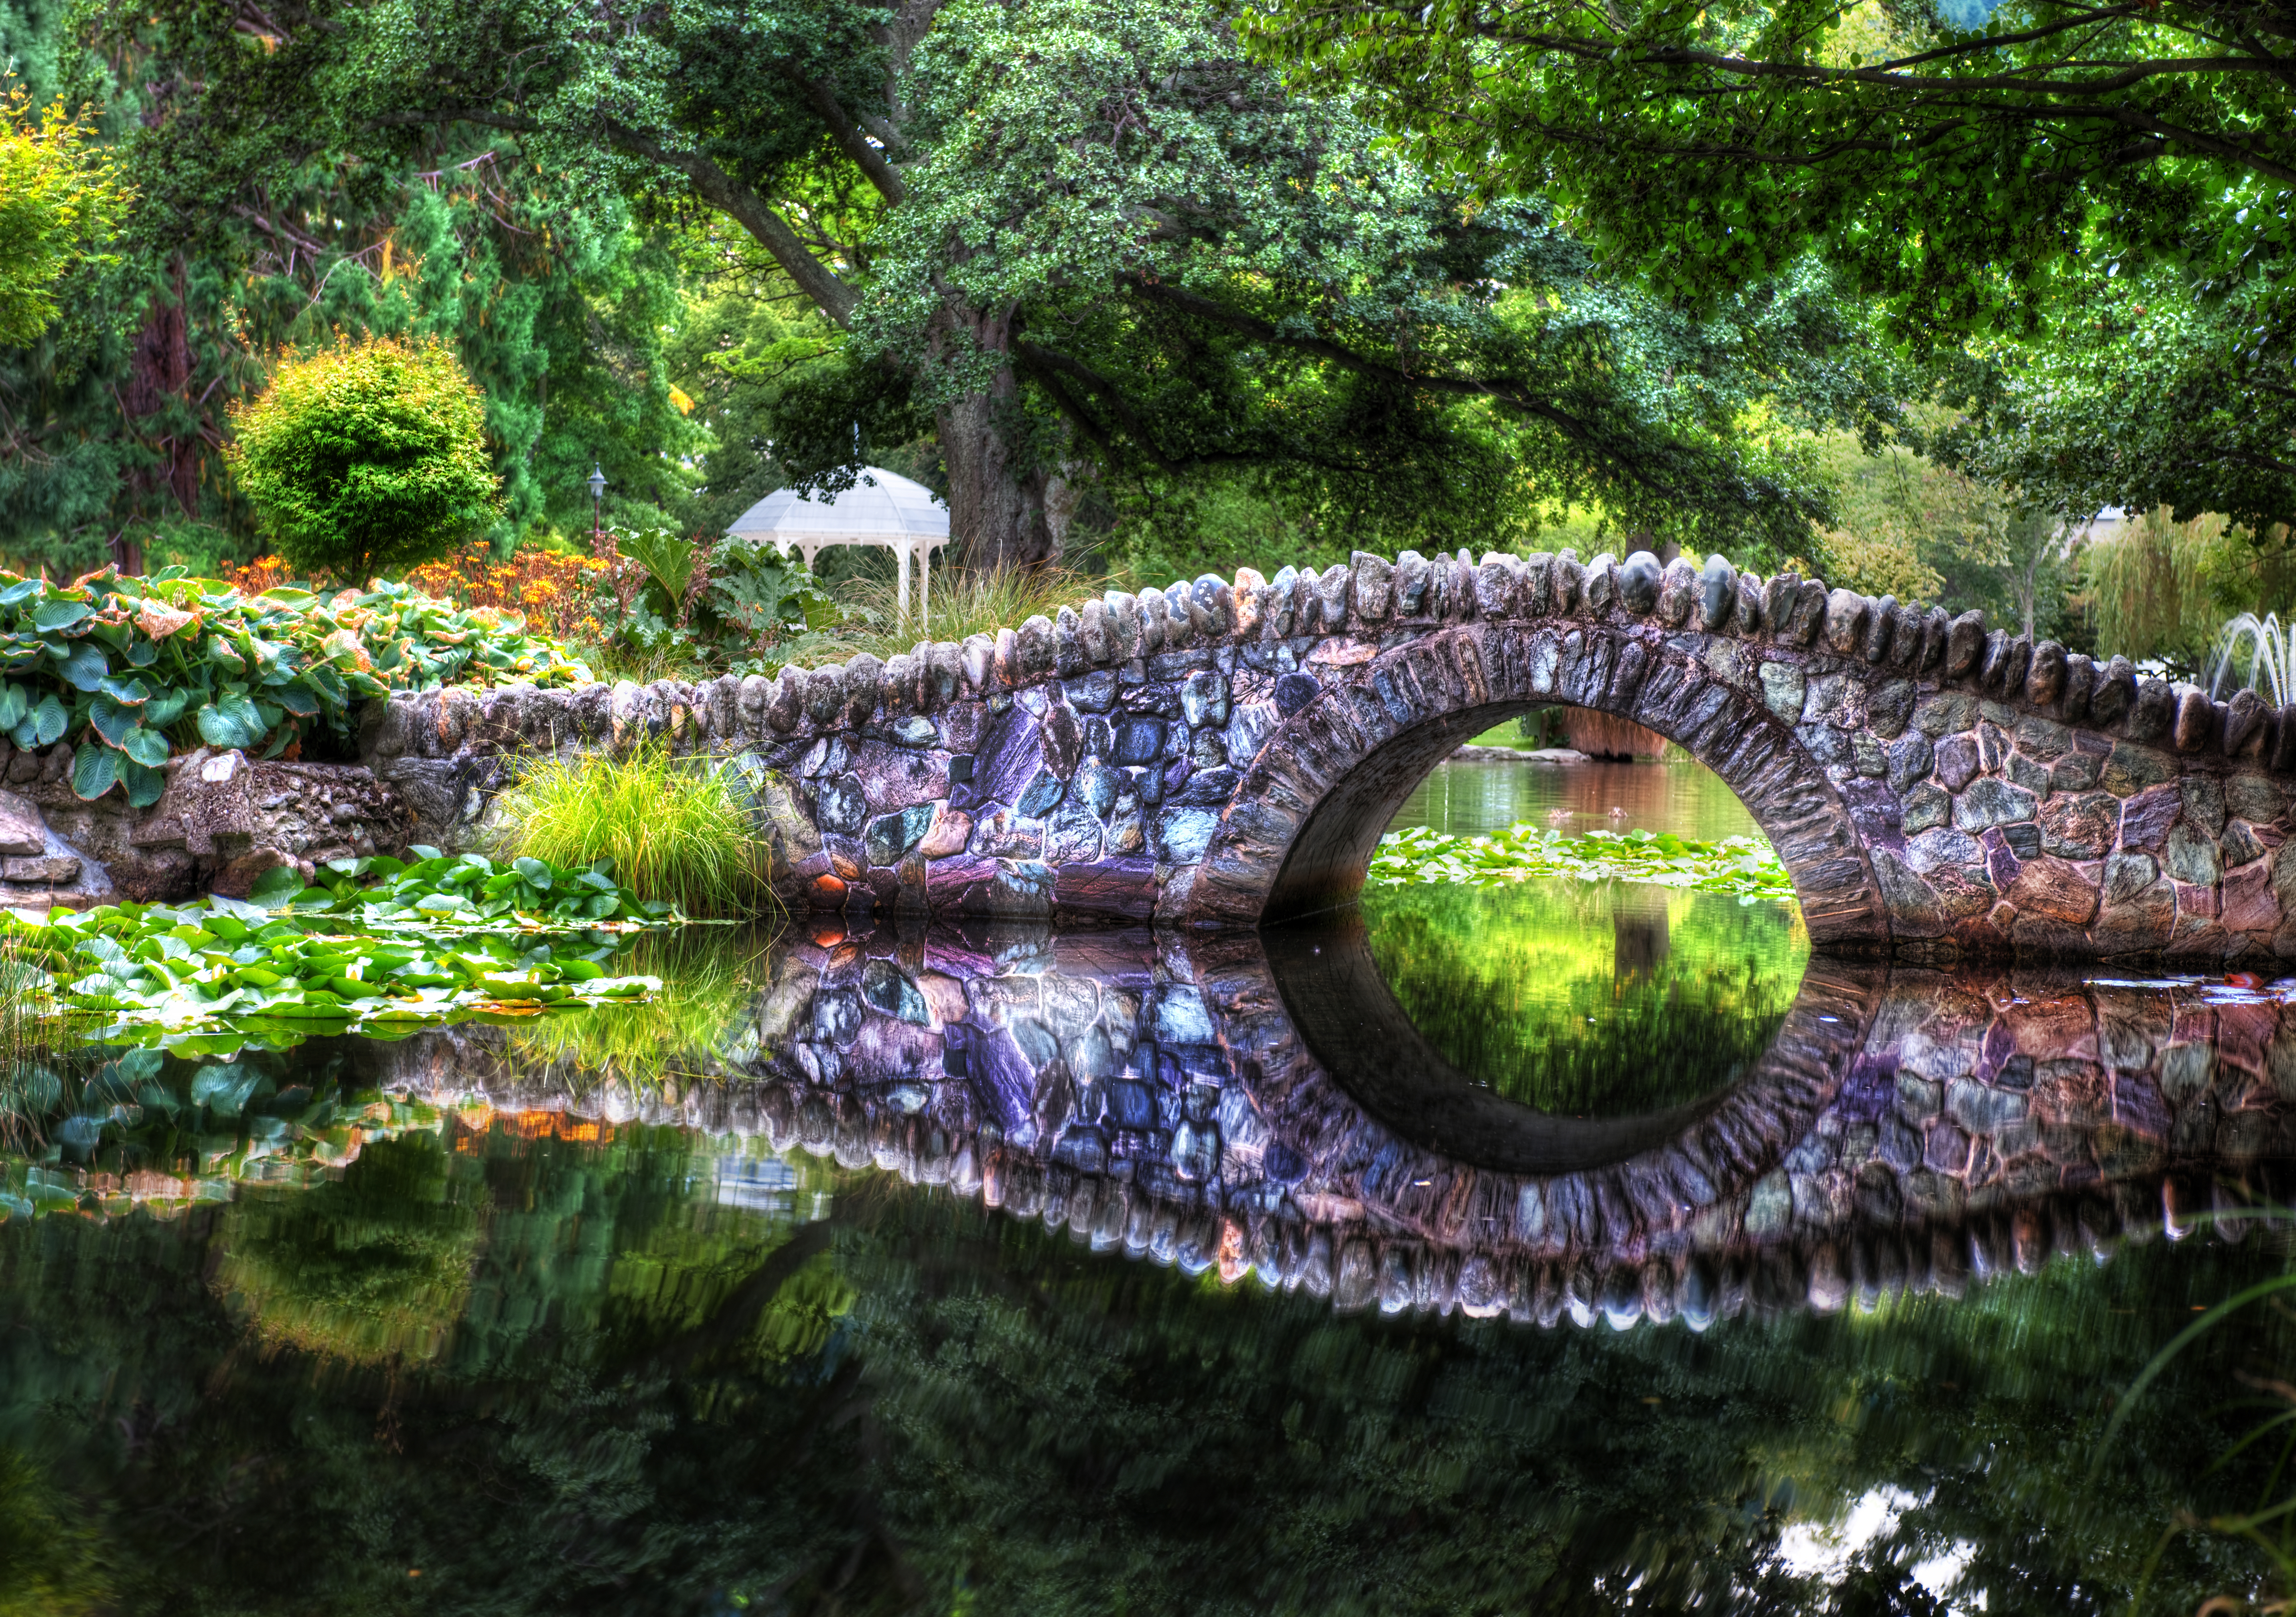 greenery, river, man made, bridge, pond, reflection, stone, bridges cellphone